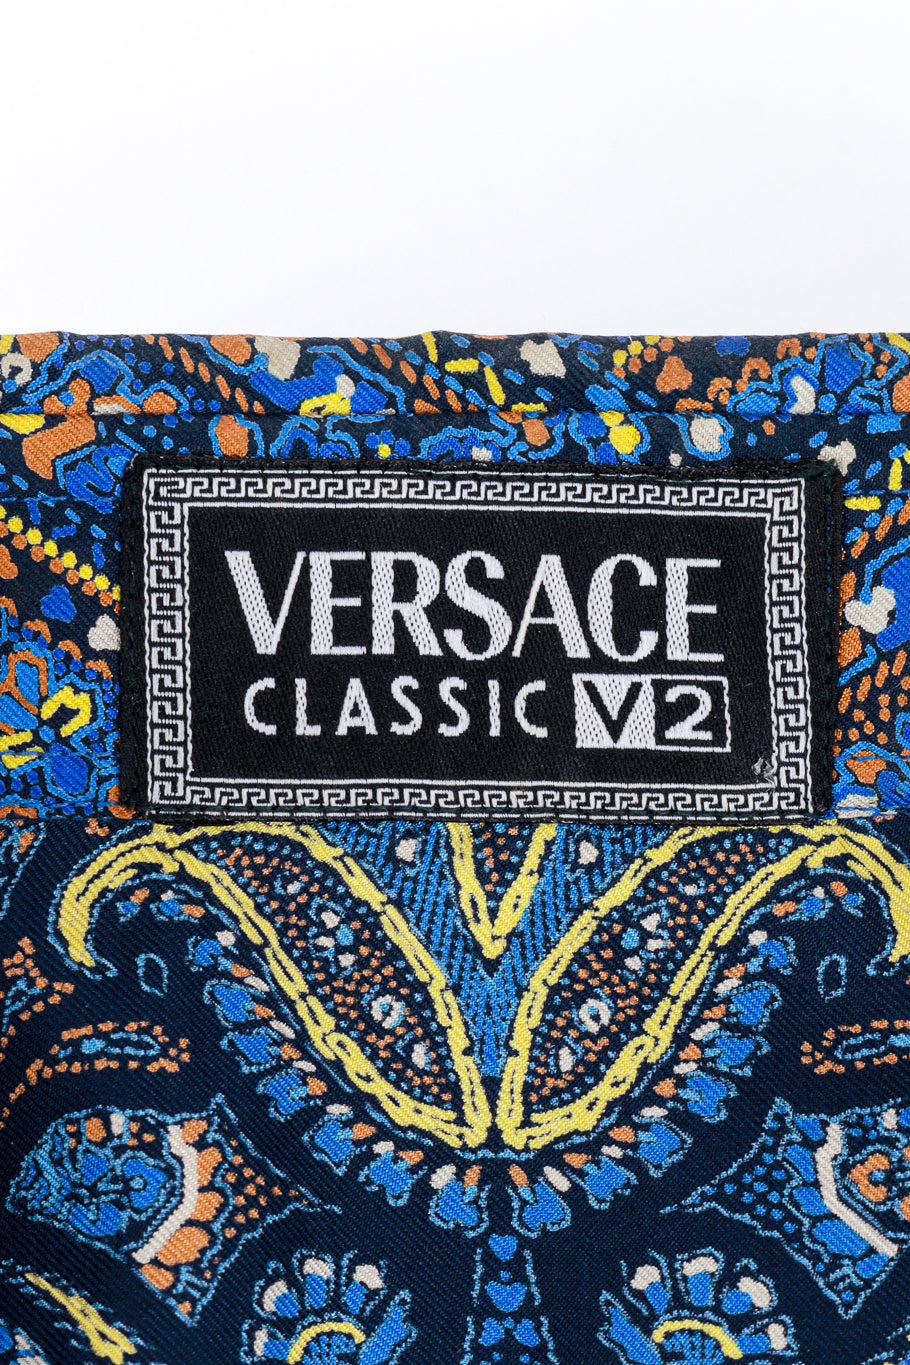 Vintage Versace Classic V2 Paisley Print Blouse signature label closeup @recess la